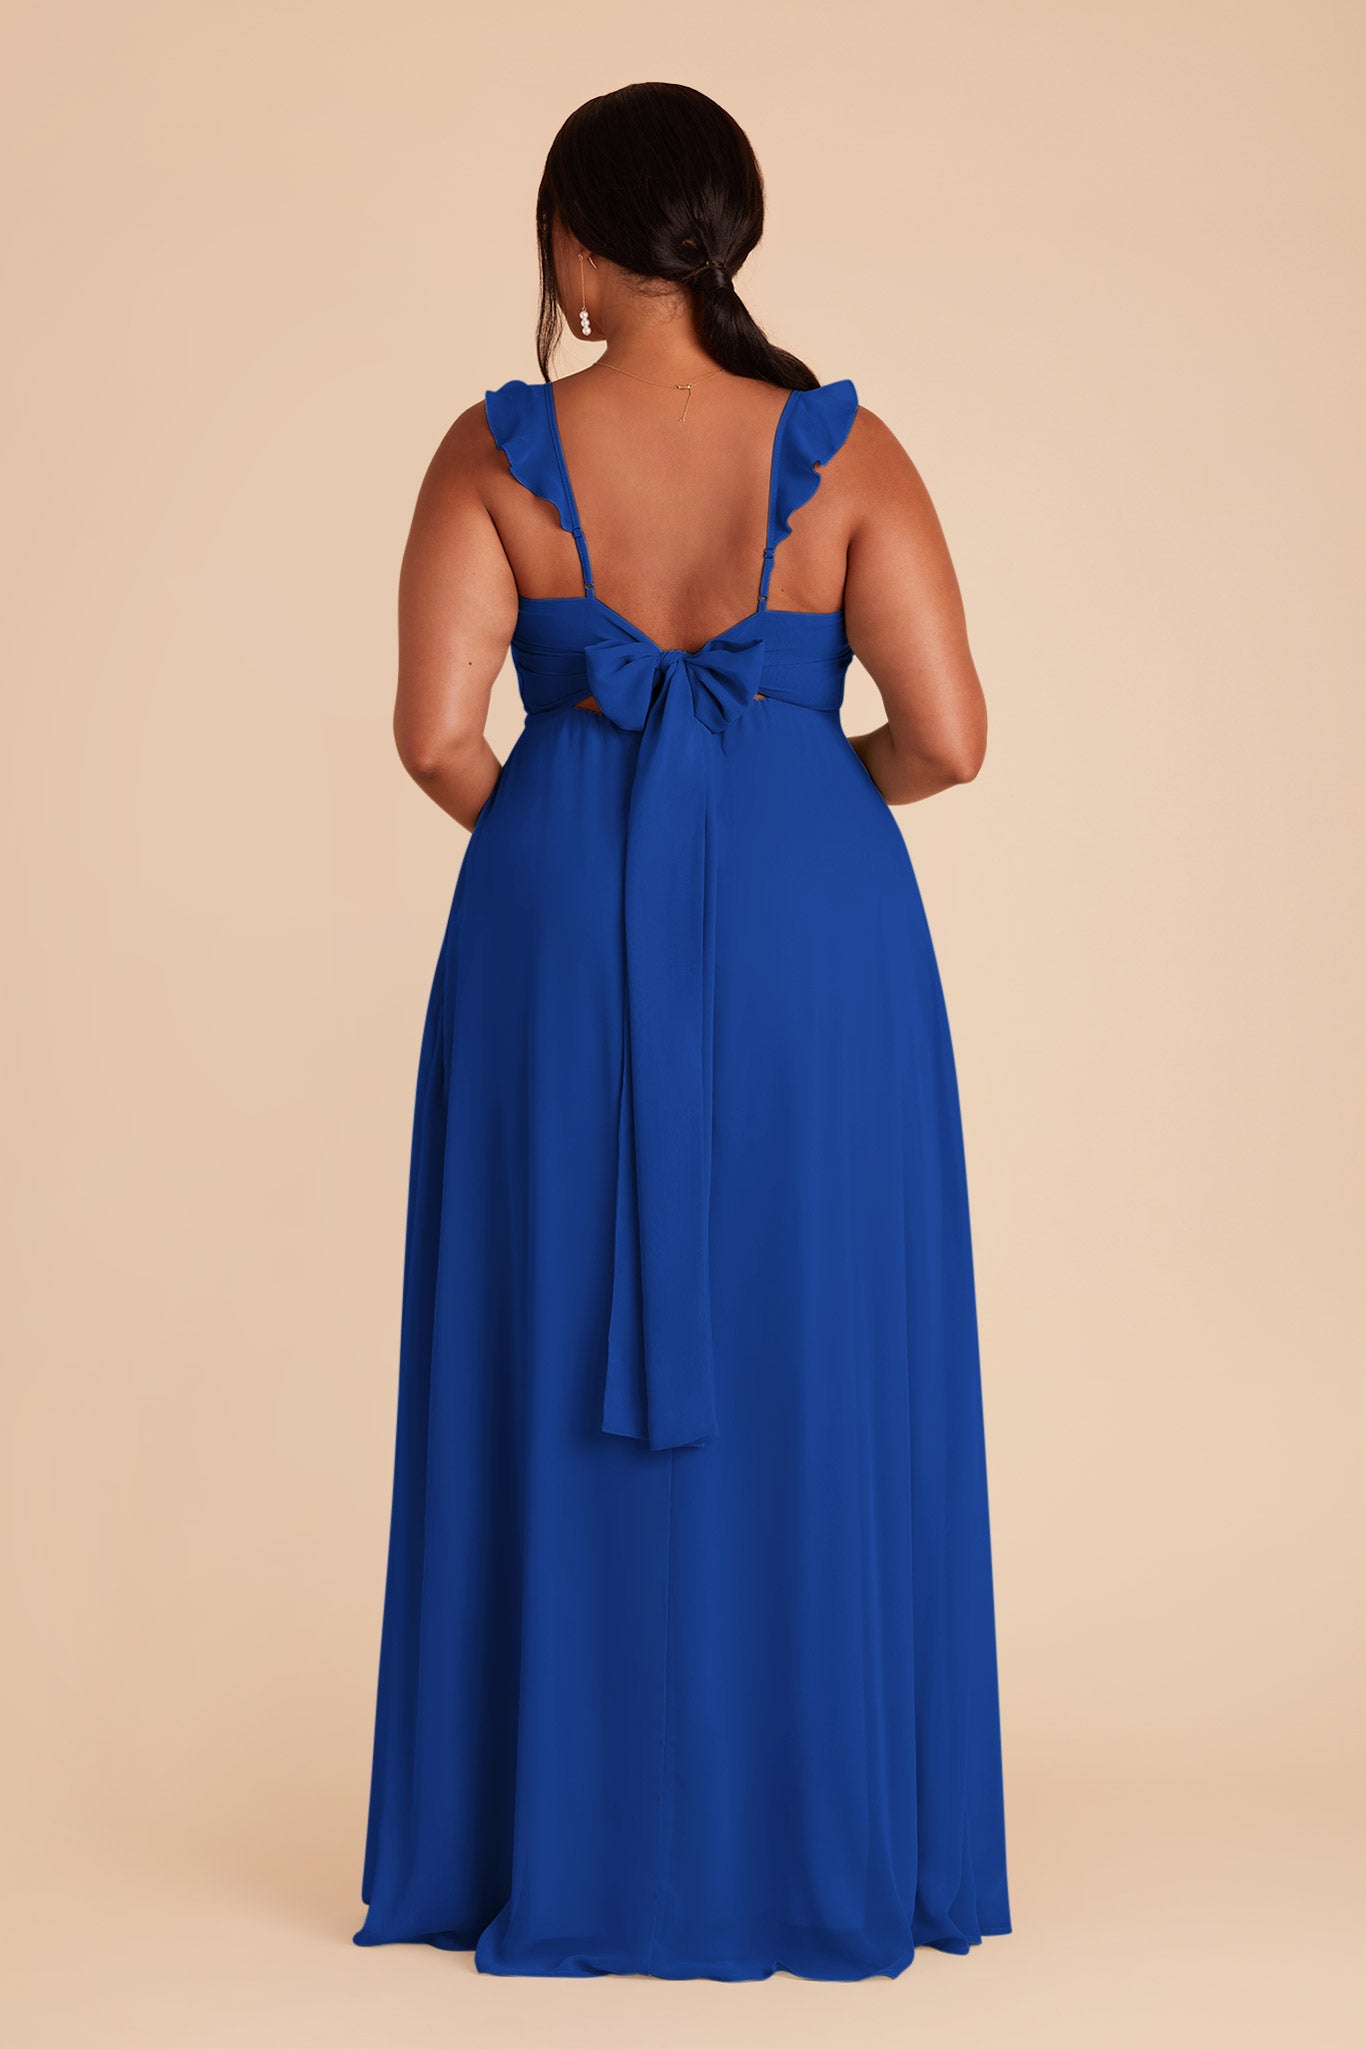 Cobalt Blue Doris Chiffon Dress by Birdy Grey